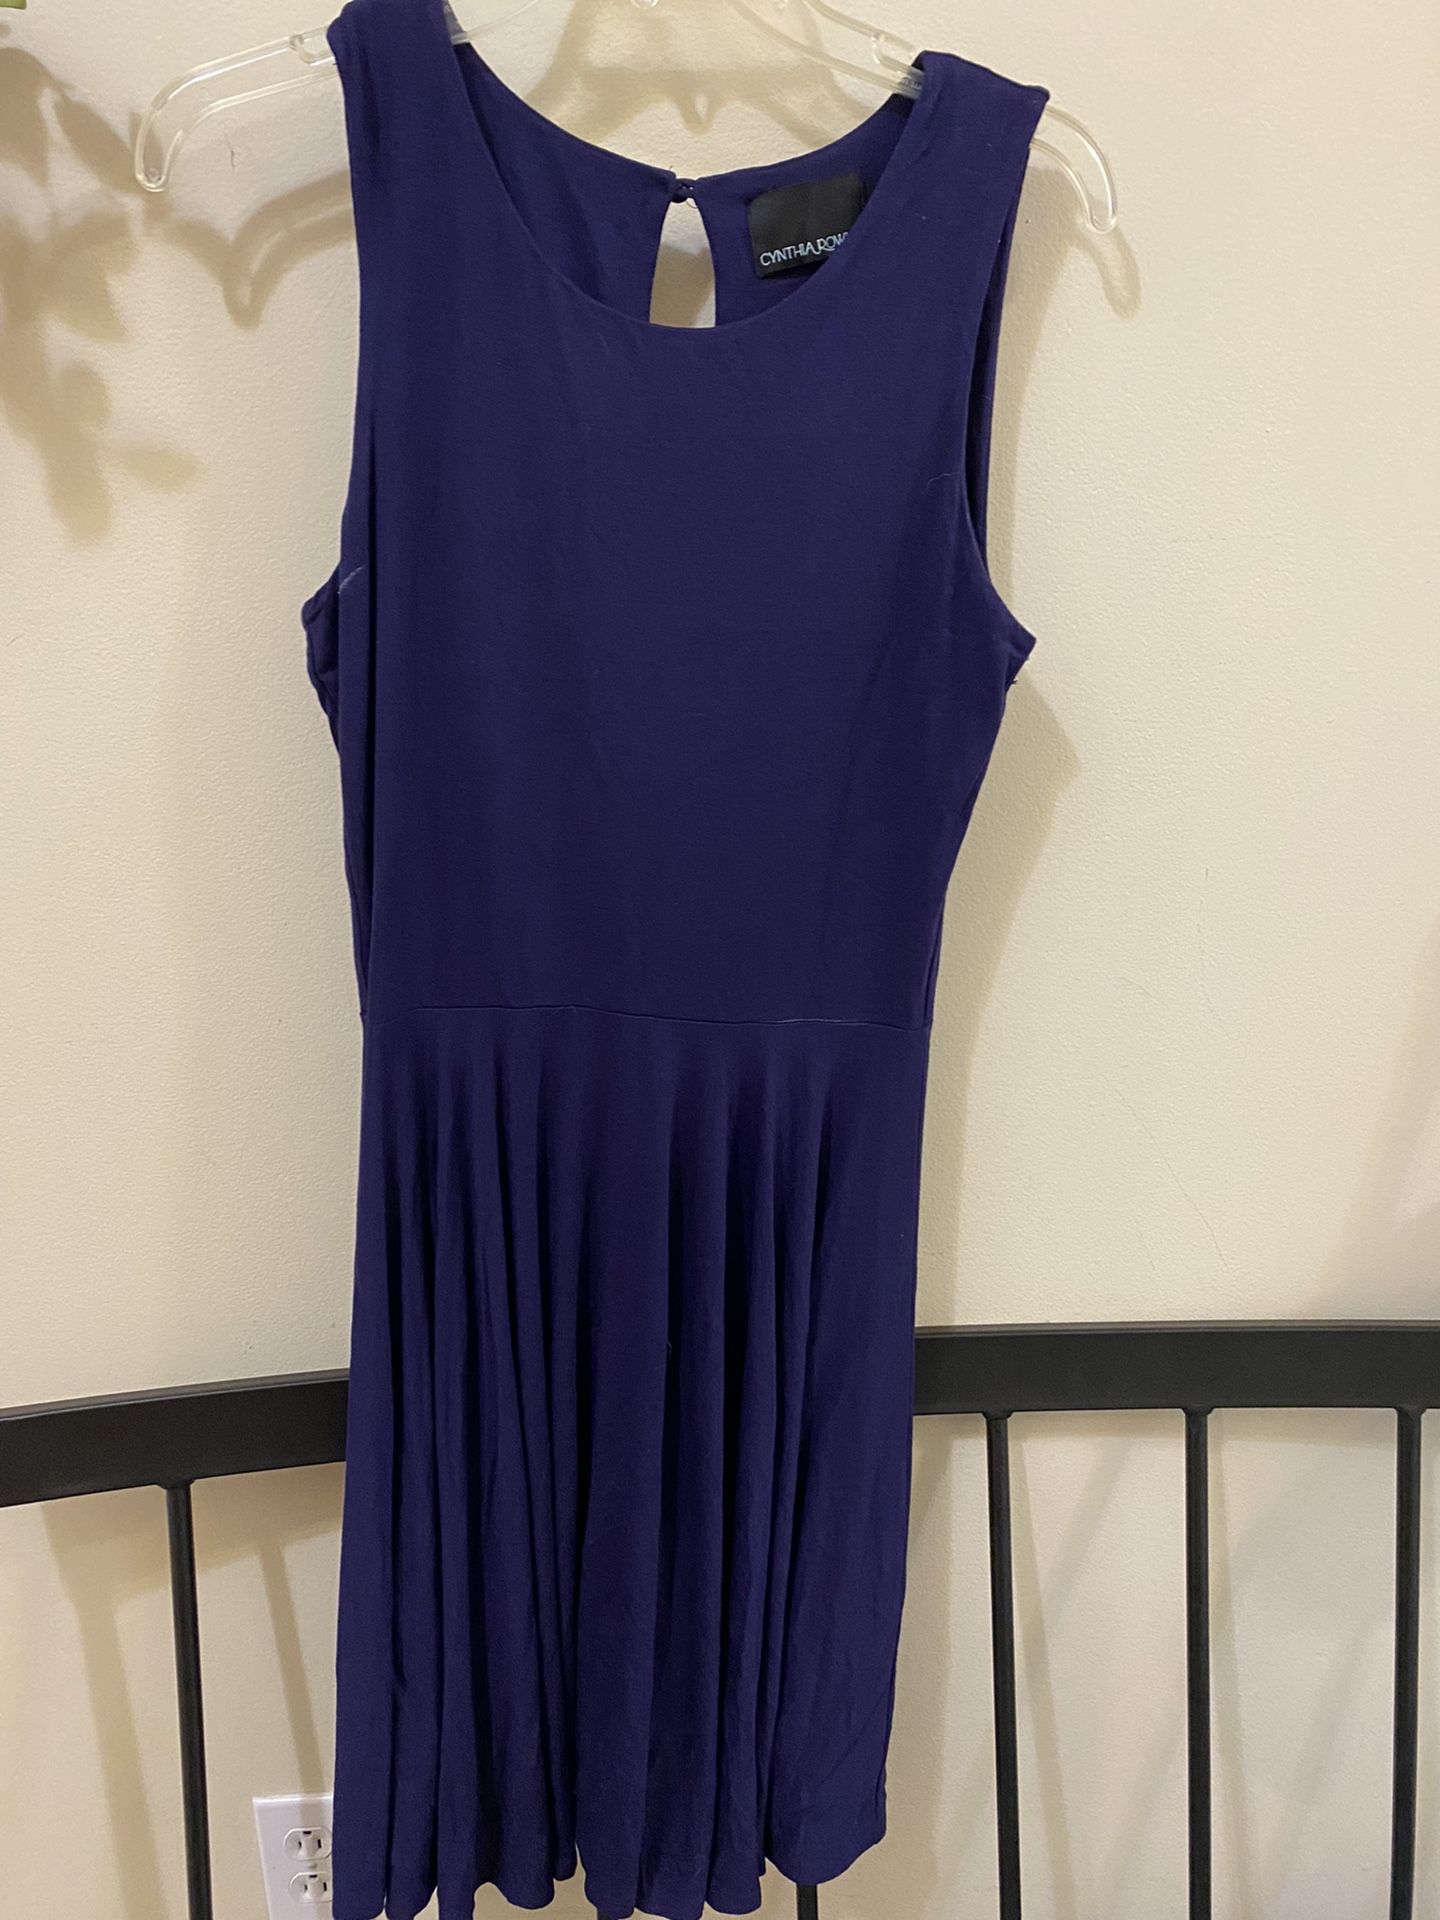 Cynthia Rowley Cotton stretch sundress-Aline design-Size Medium